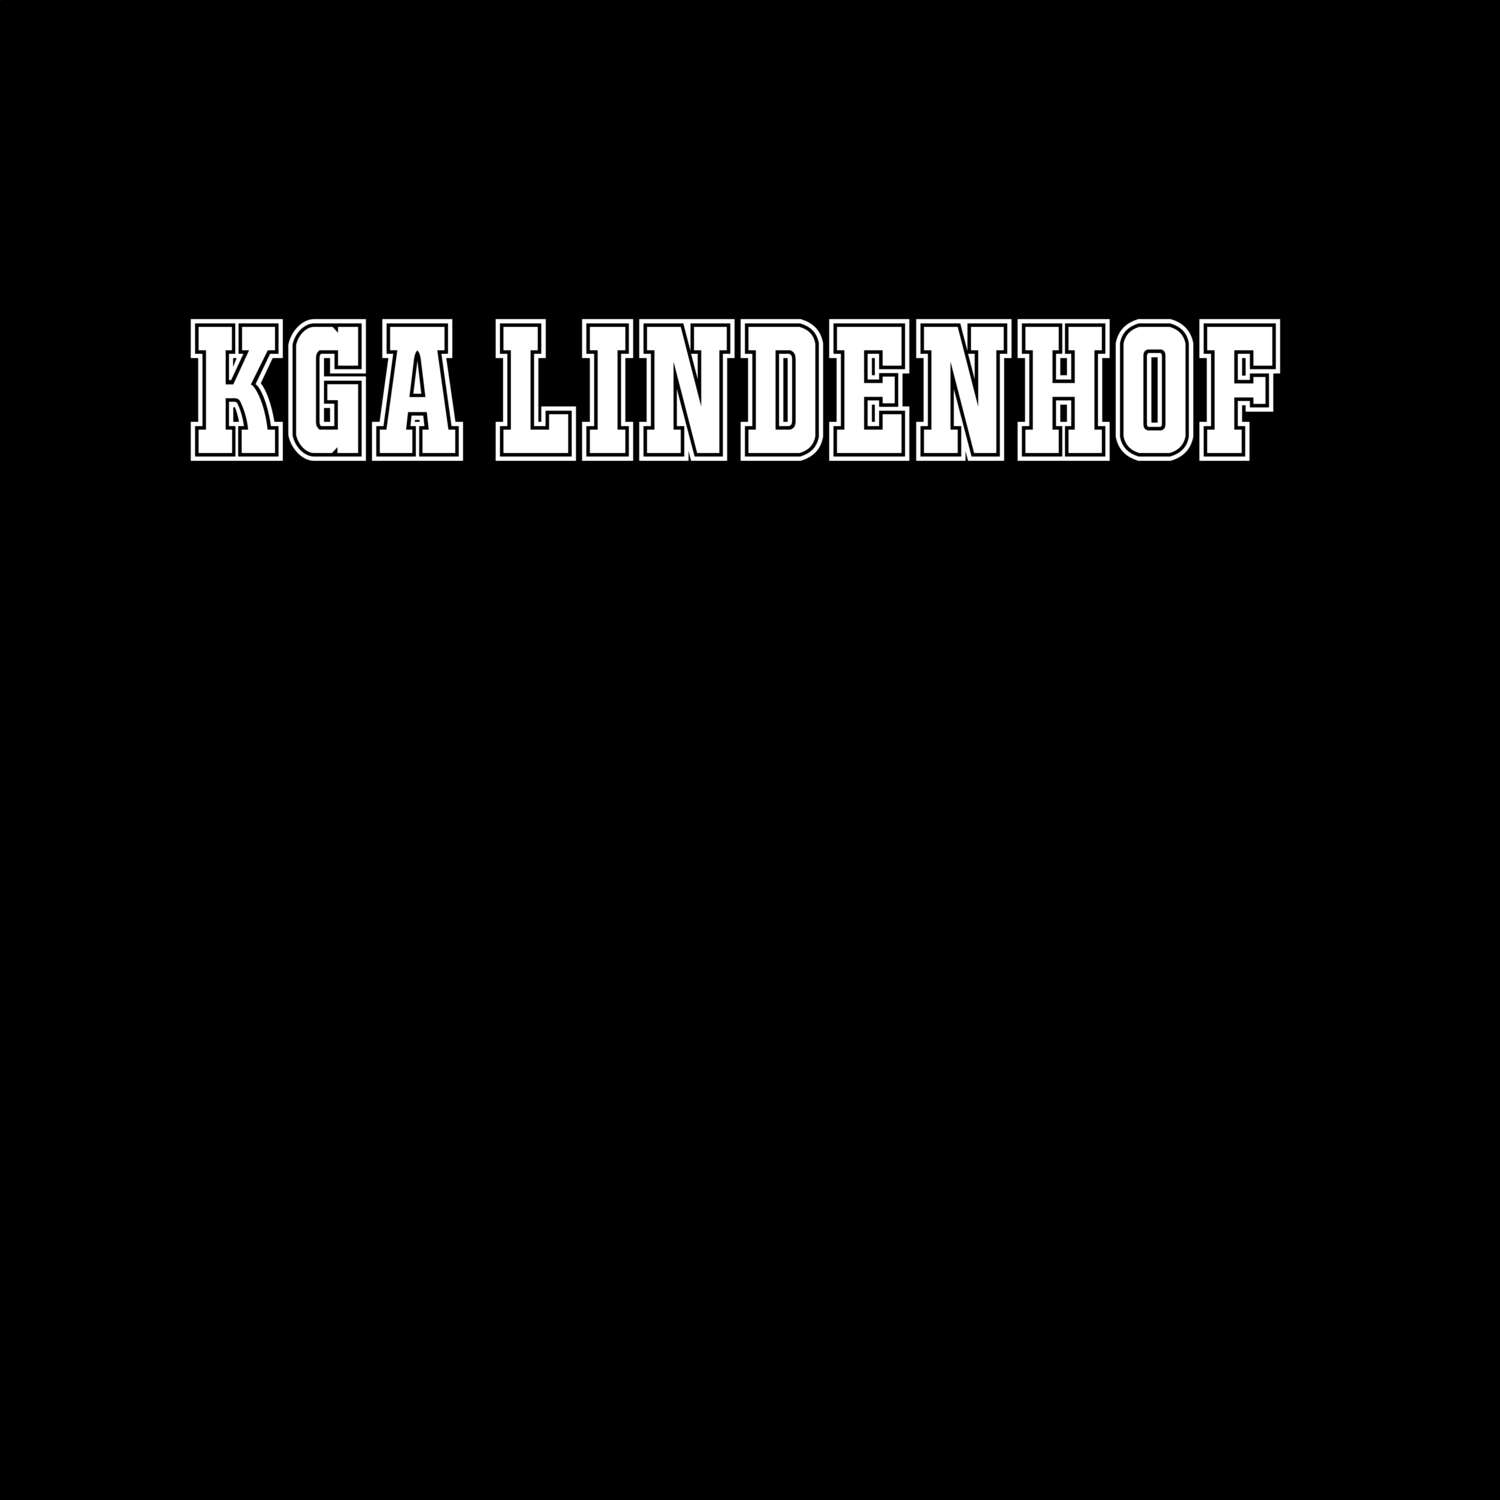 KGA Lindenhof T-Shirt »Classic«